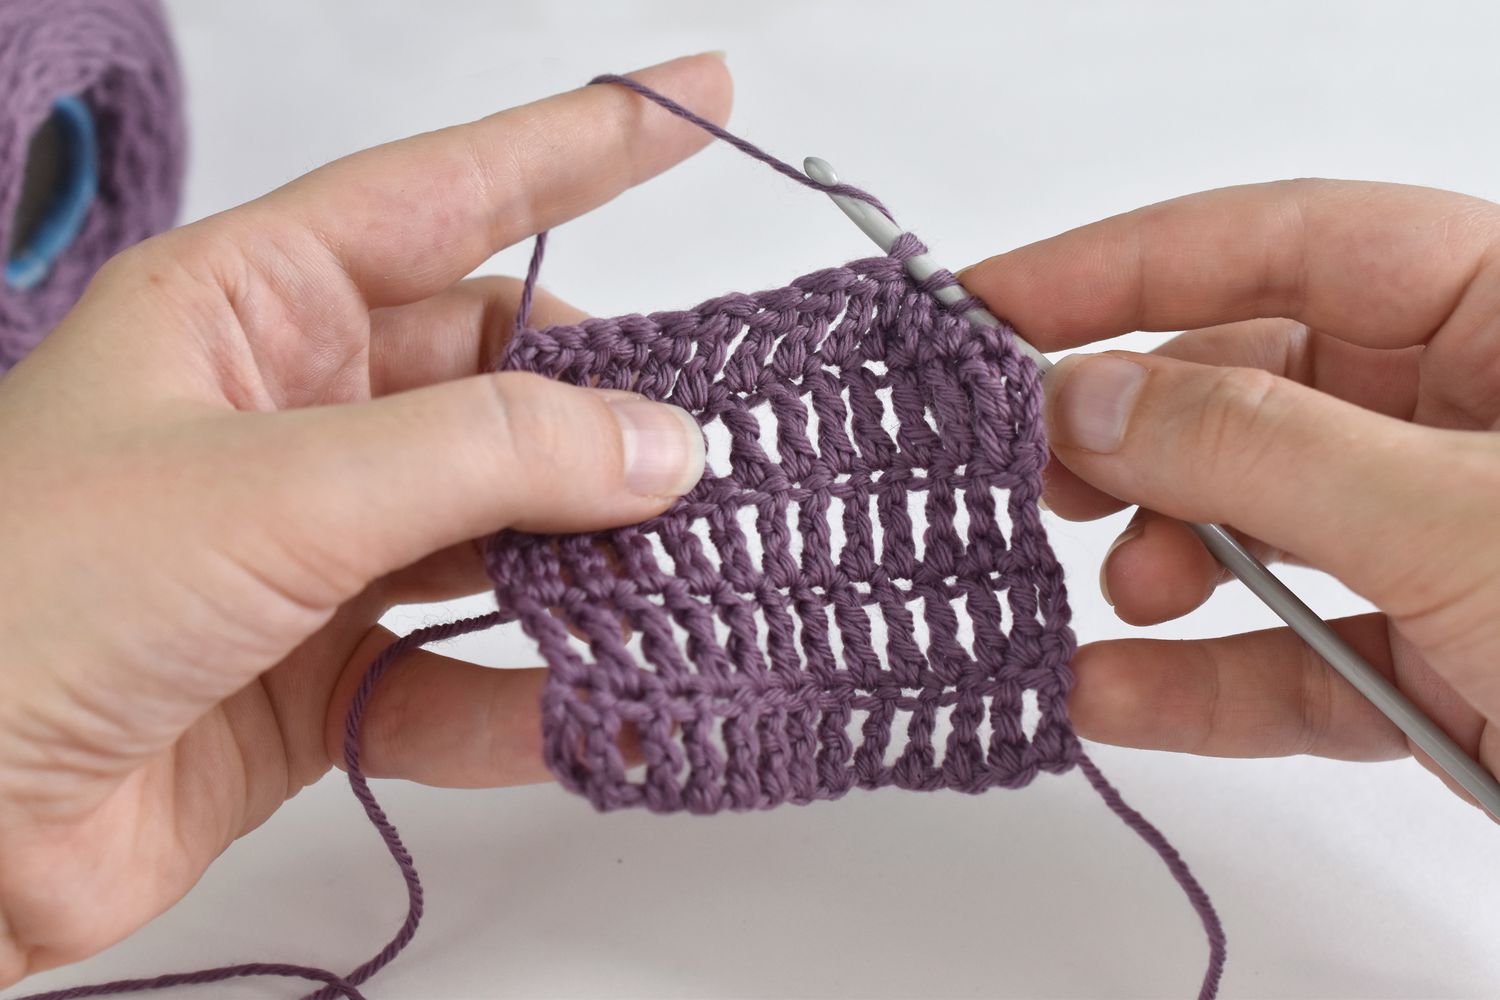 Common Crocheted